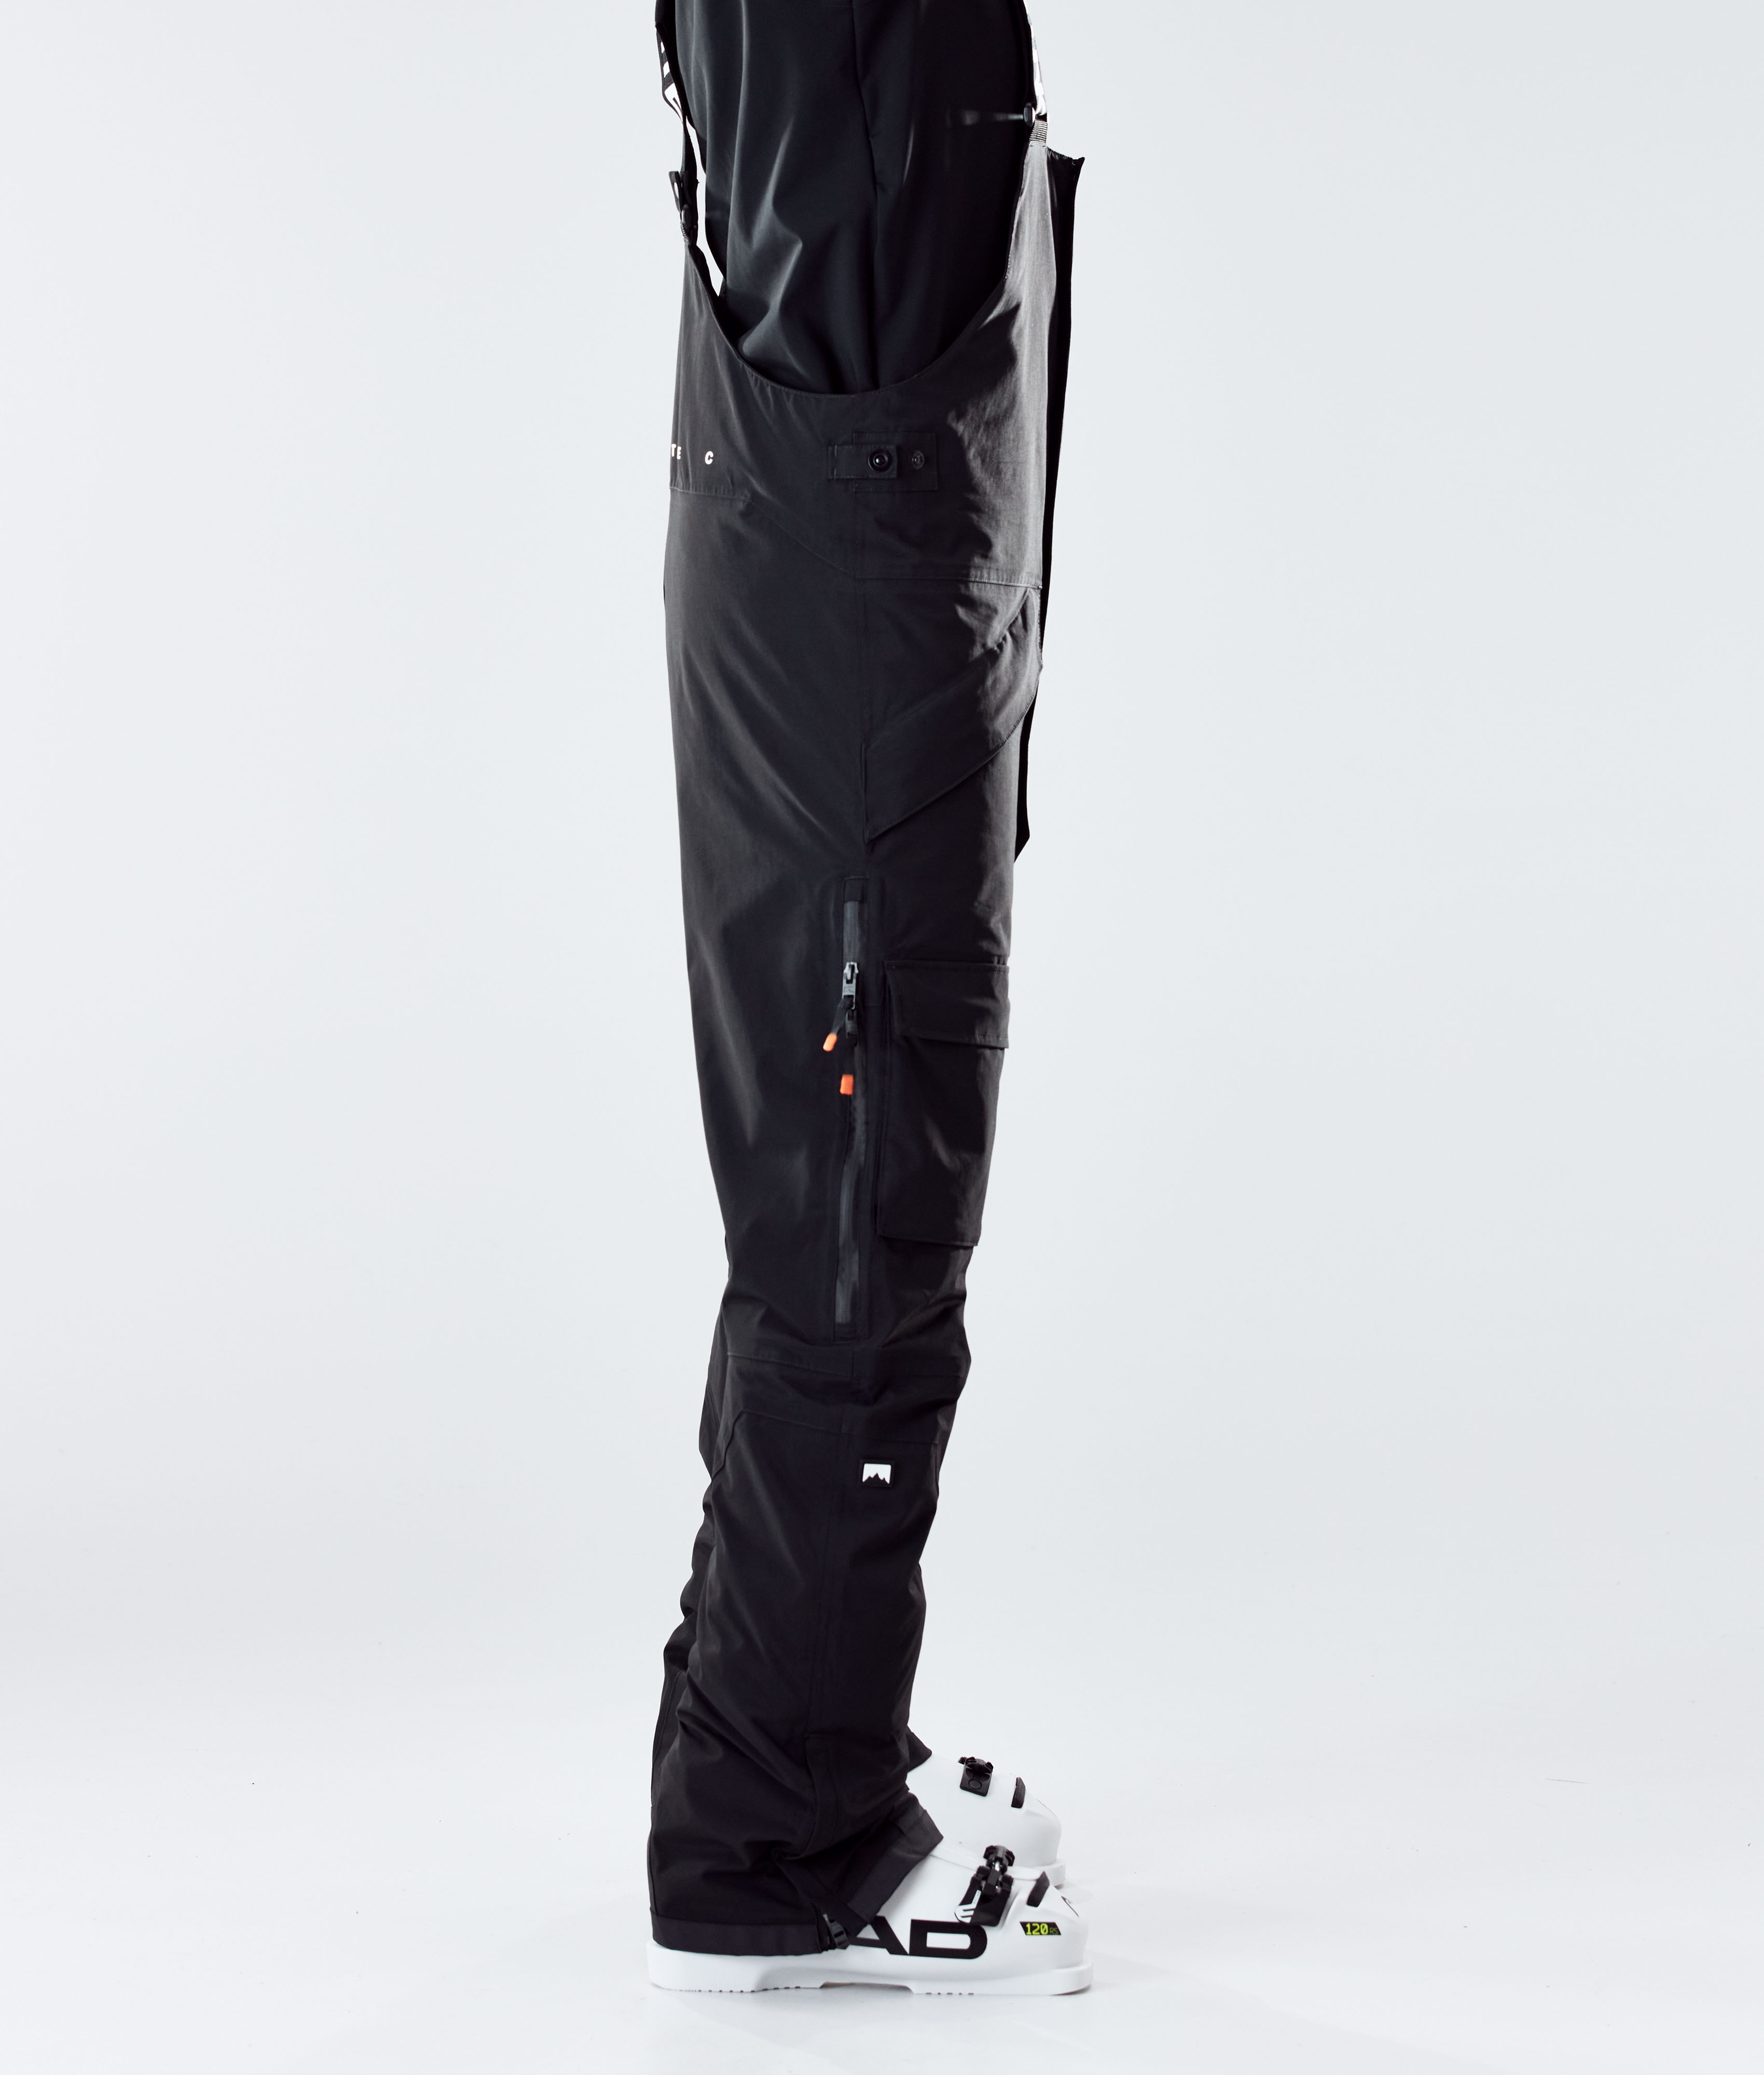 Fawk 2020 Ski Pants Black | Montecwear.com